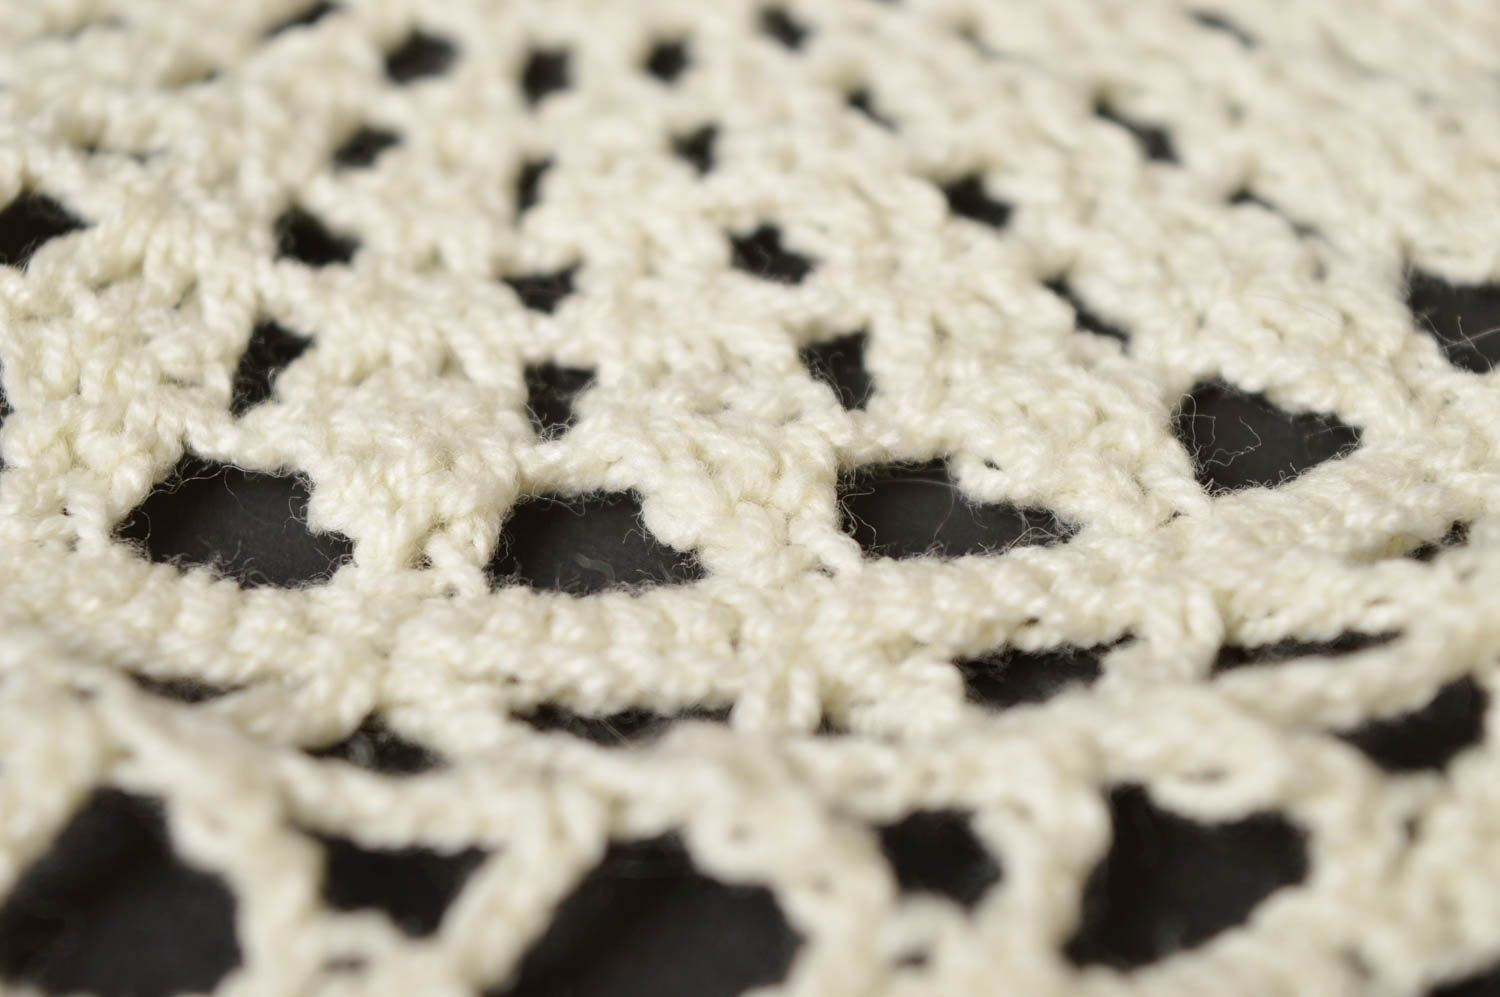 Servilleta tejida a crochet artesanal elemento decorativo diseño de casa foto 5